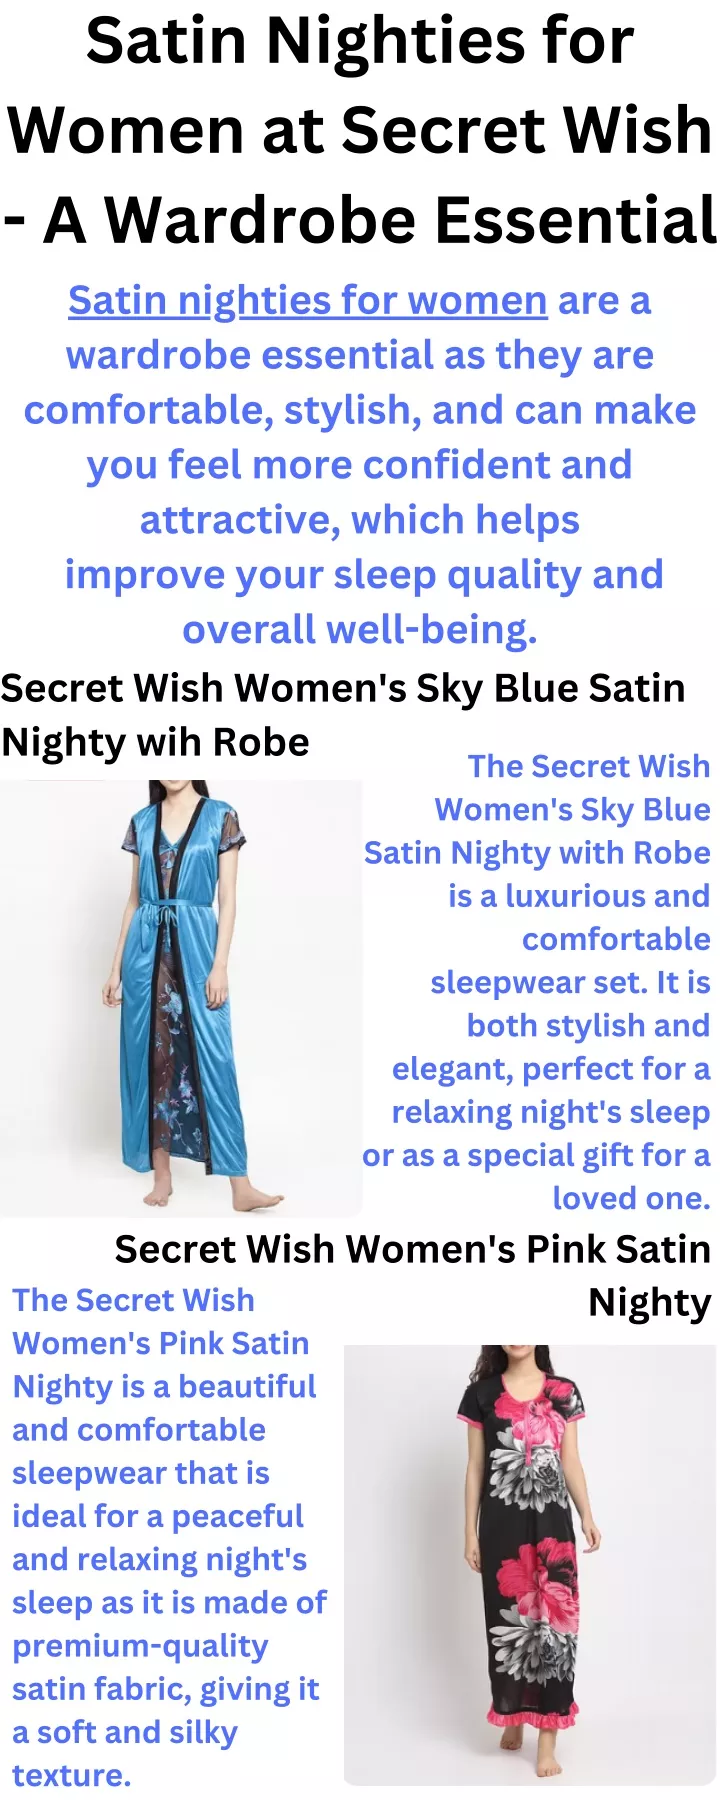 satin nighties for women at secret wish